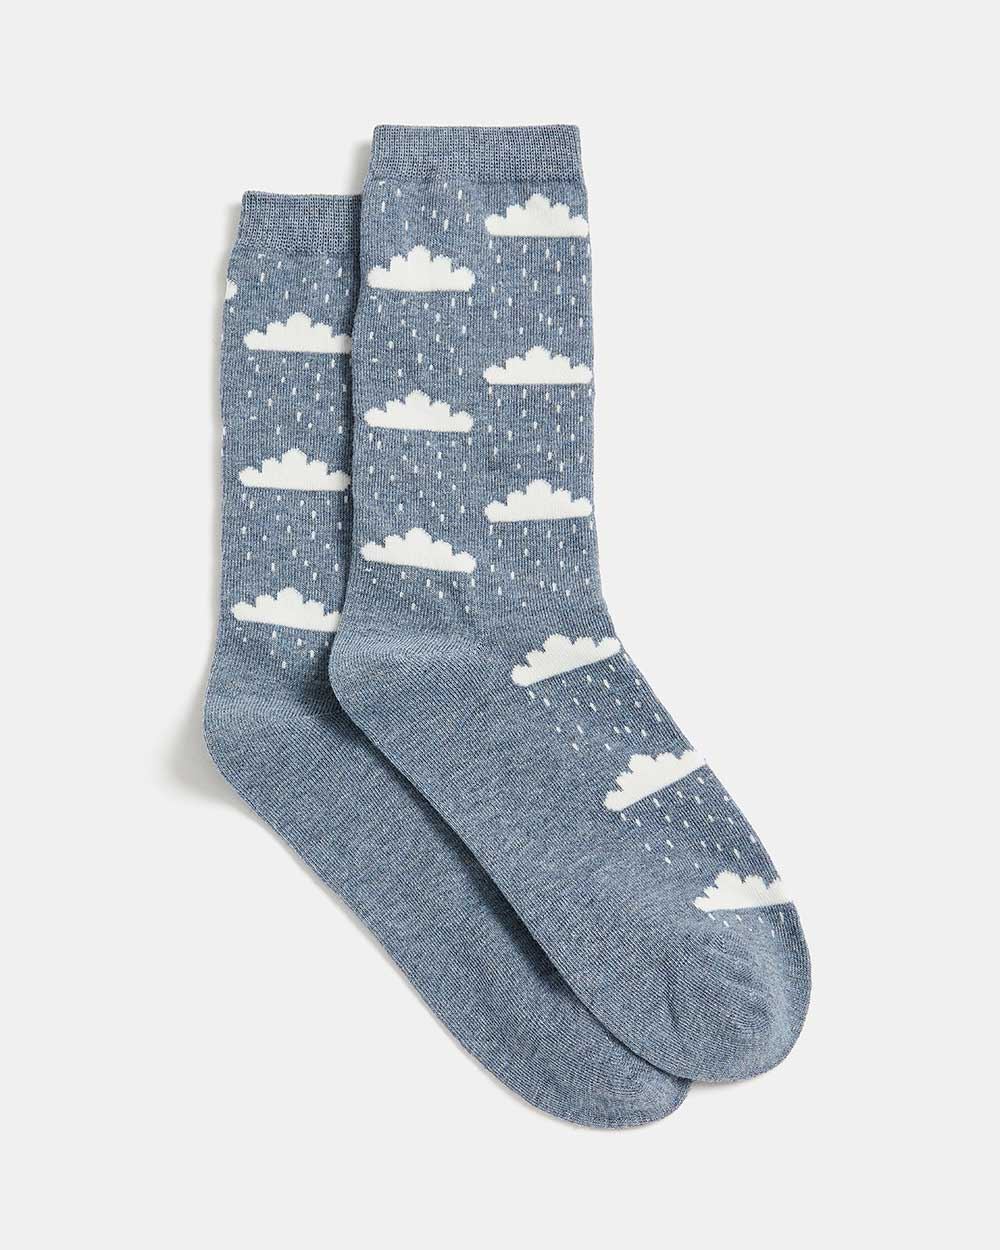 Blue Denim Socks with Snowstorm Pattern